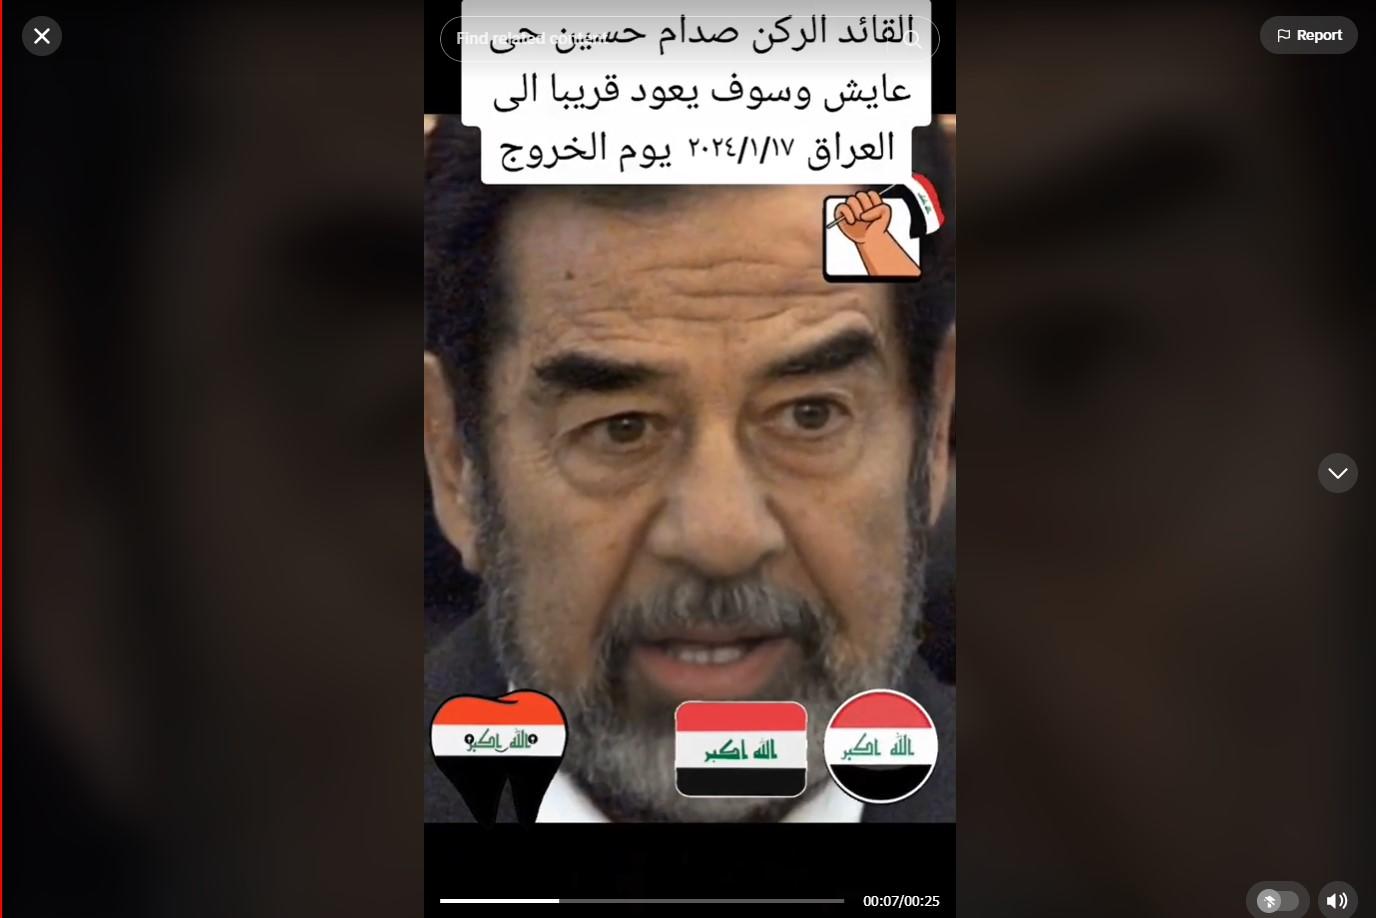 Saddam.jpg